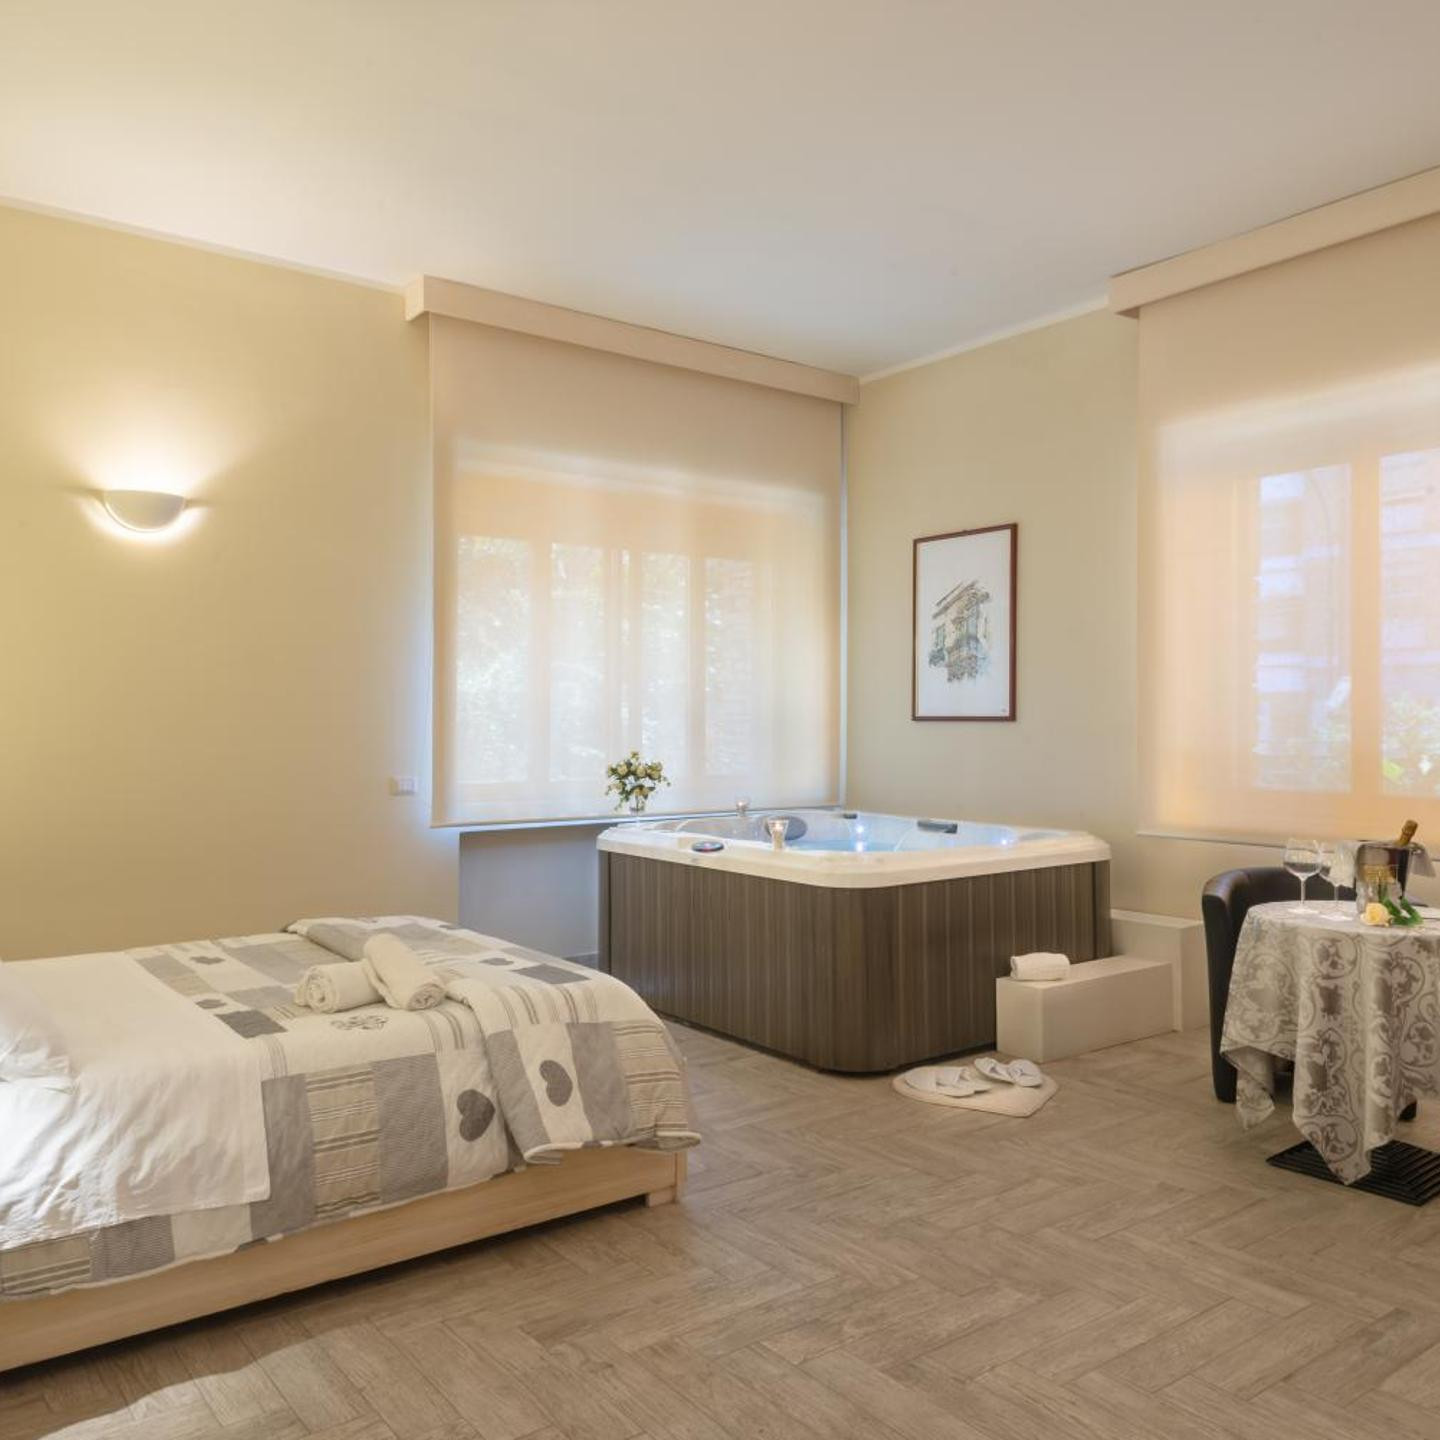 Villa Domus Salento Suites & Rooms con parcheggio privato in loco